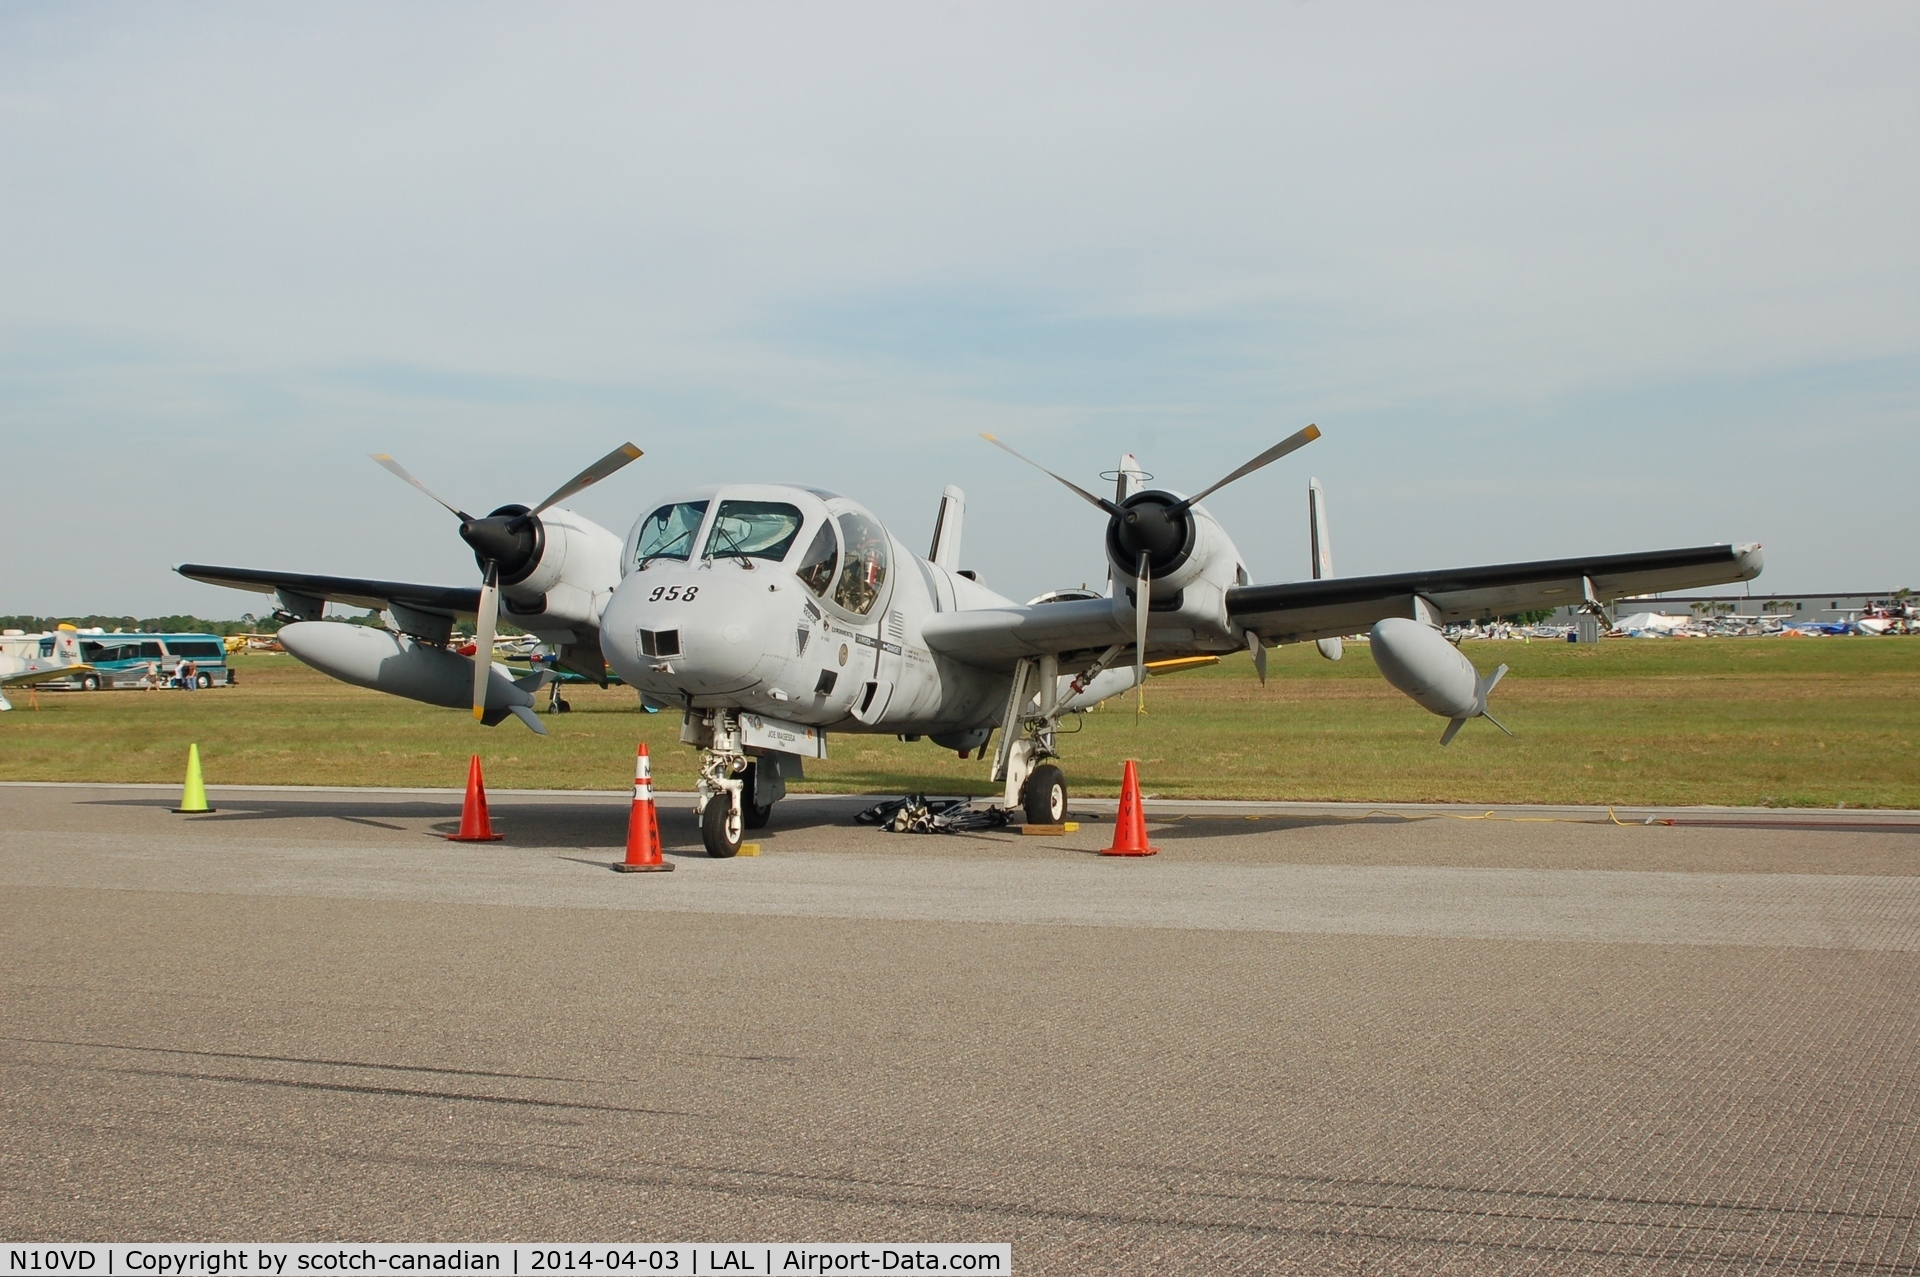 N10VD, 1968 Grumman OV-1D Mohawk C/N 162C, 1968 Grumman OV-1D Mohawk, N10VD, at 2014 Sun n Fun, Lakeland Linder Regional Airport, Lakeland, FL